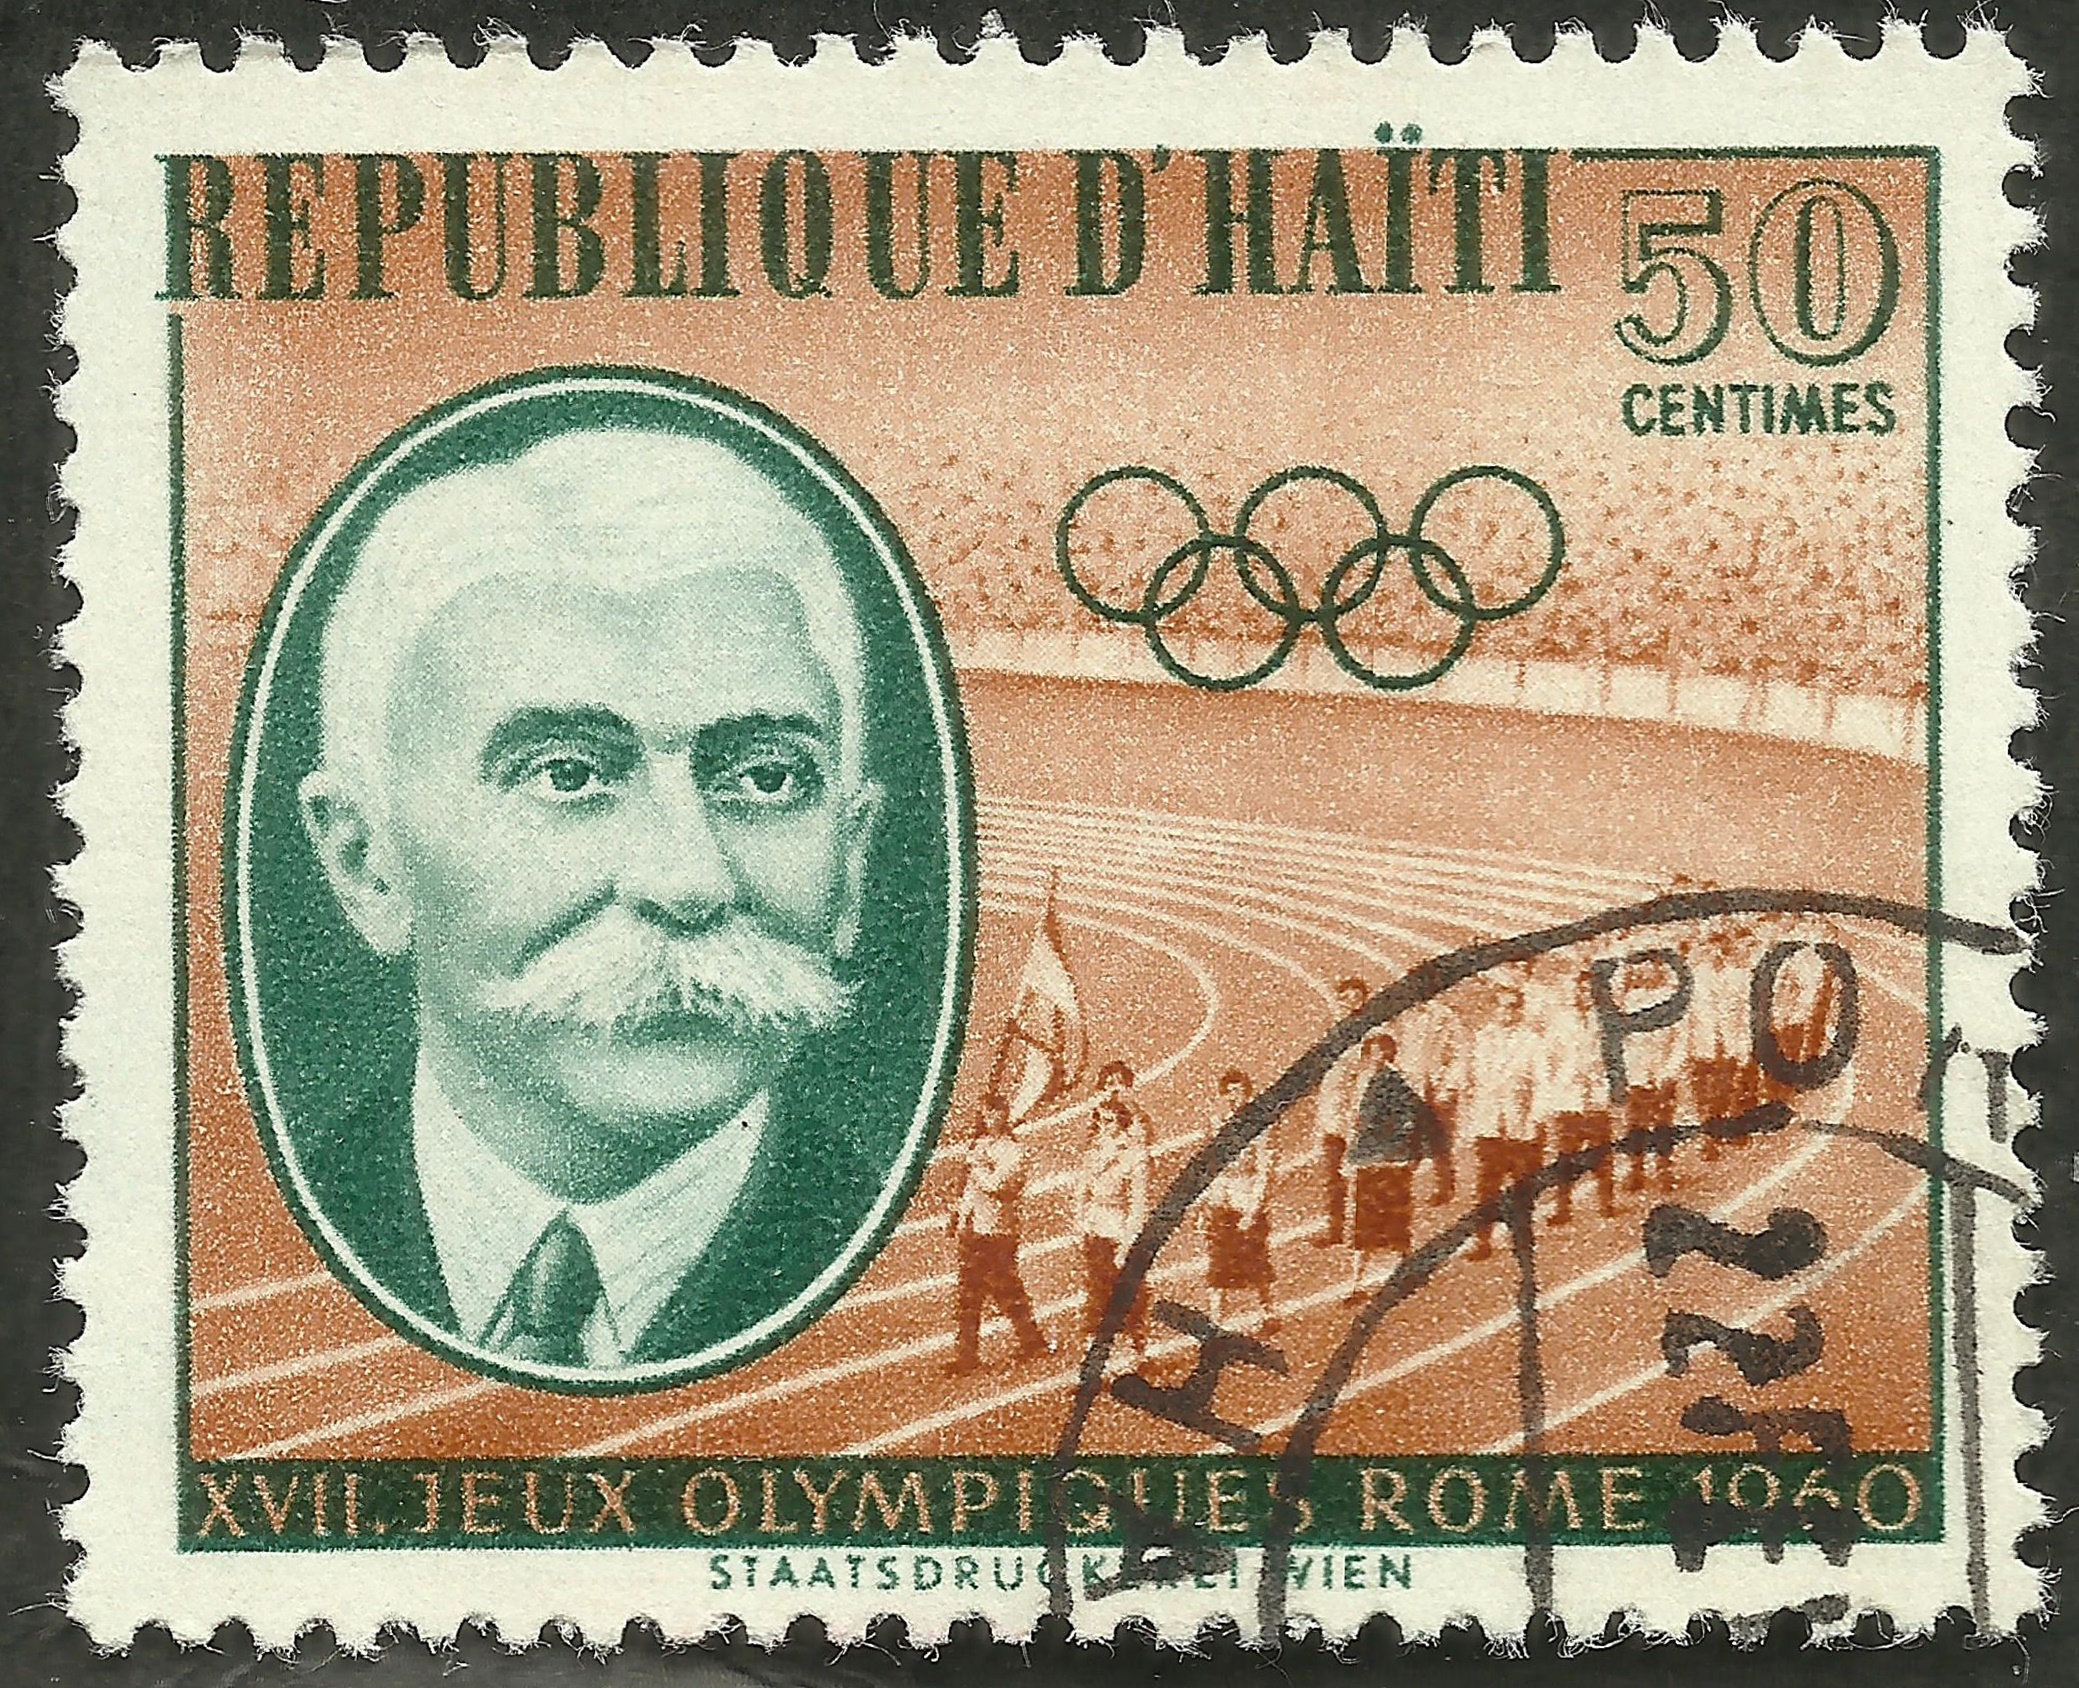 Haiti - Scott #464 (1960) - Baron Pierre de Coubertin, founder of the modern Olympic movement, was born on January 1, 1863.